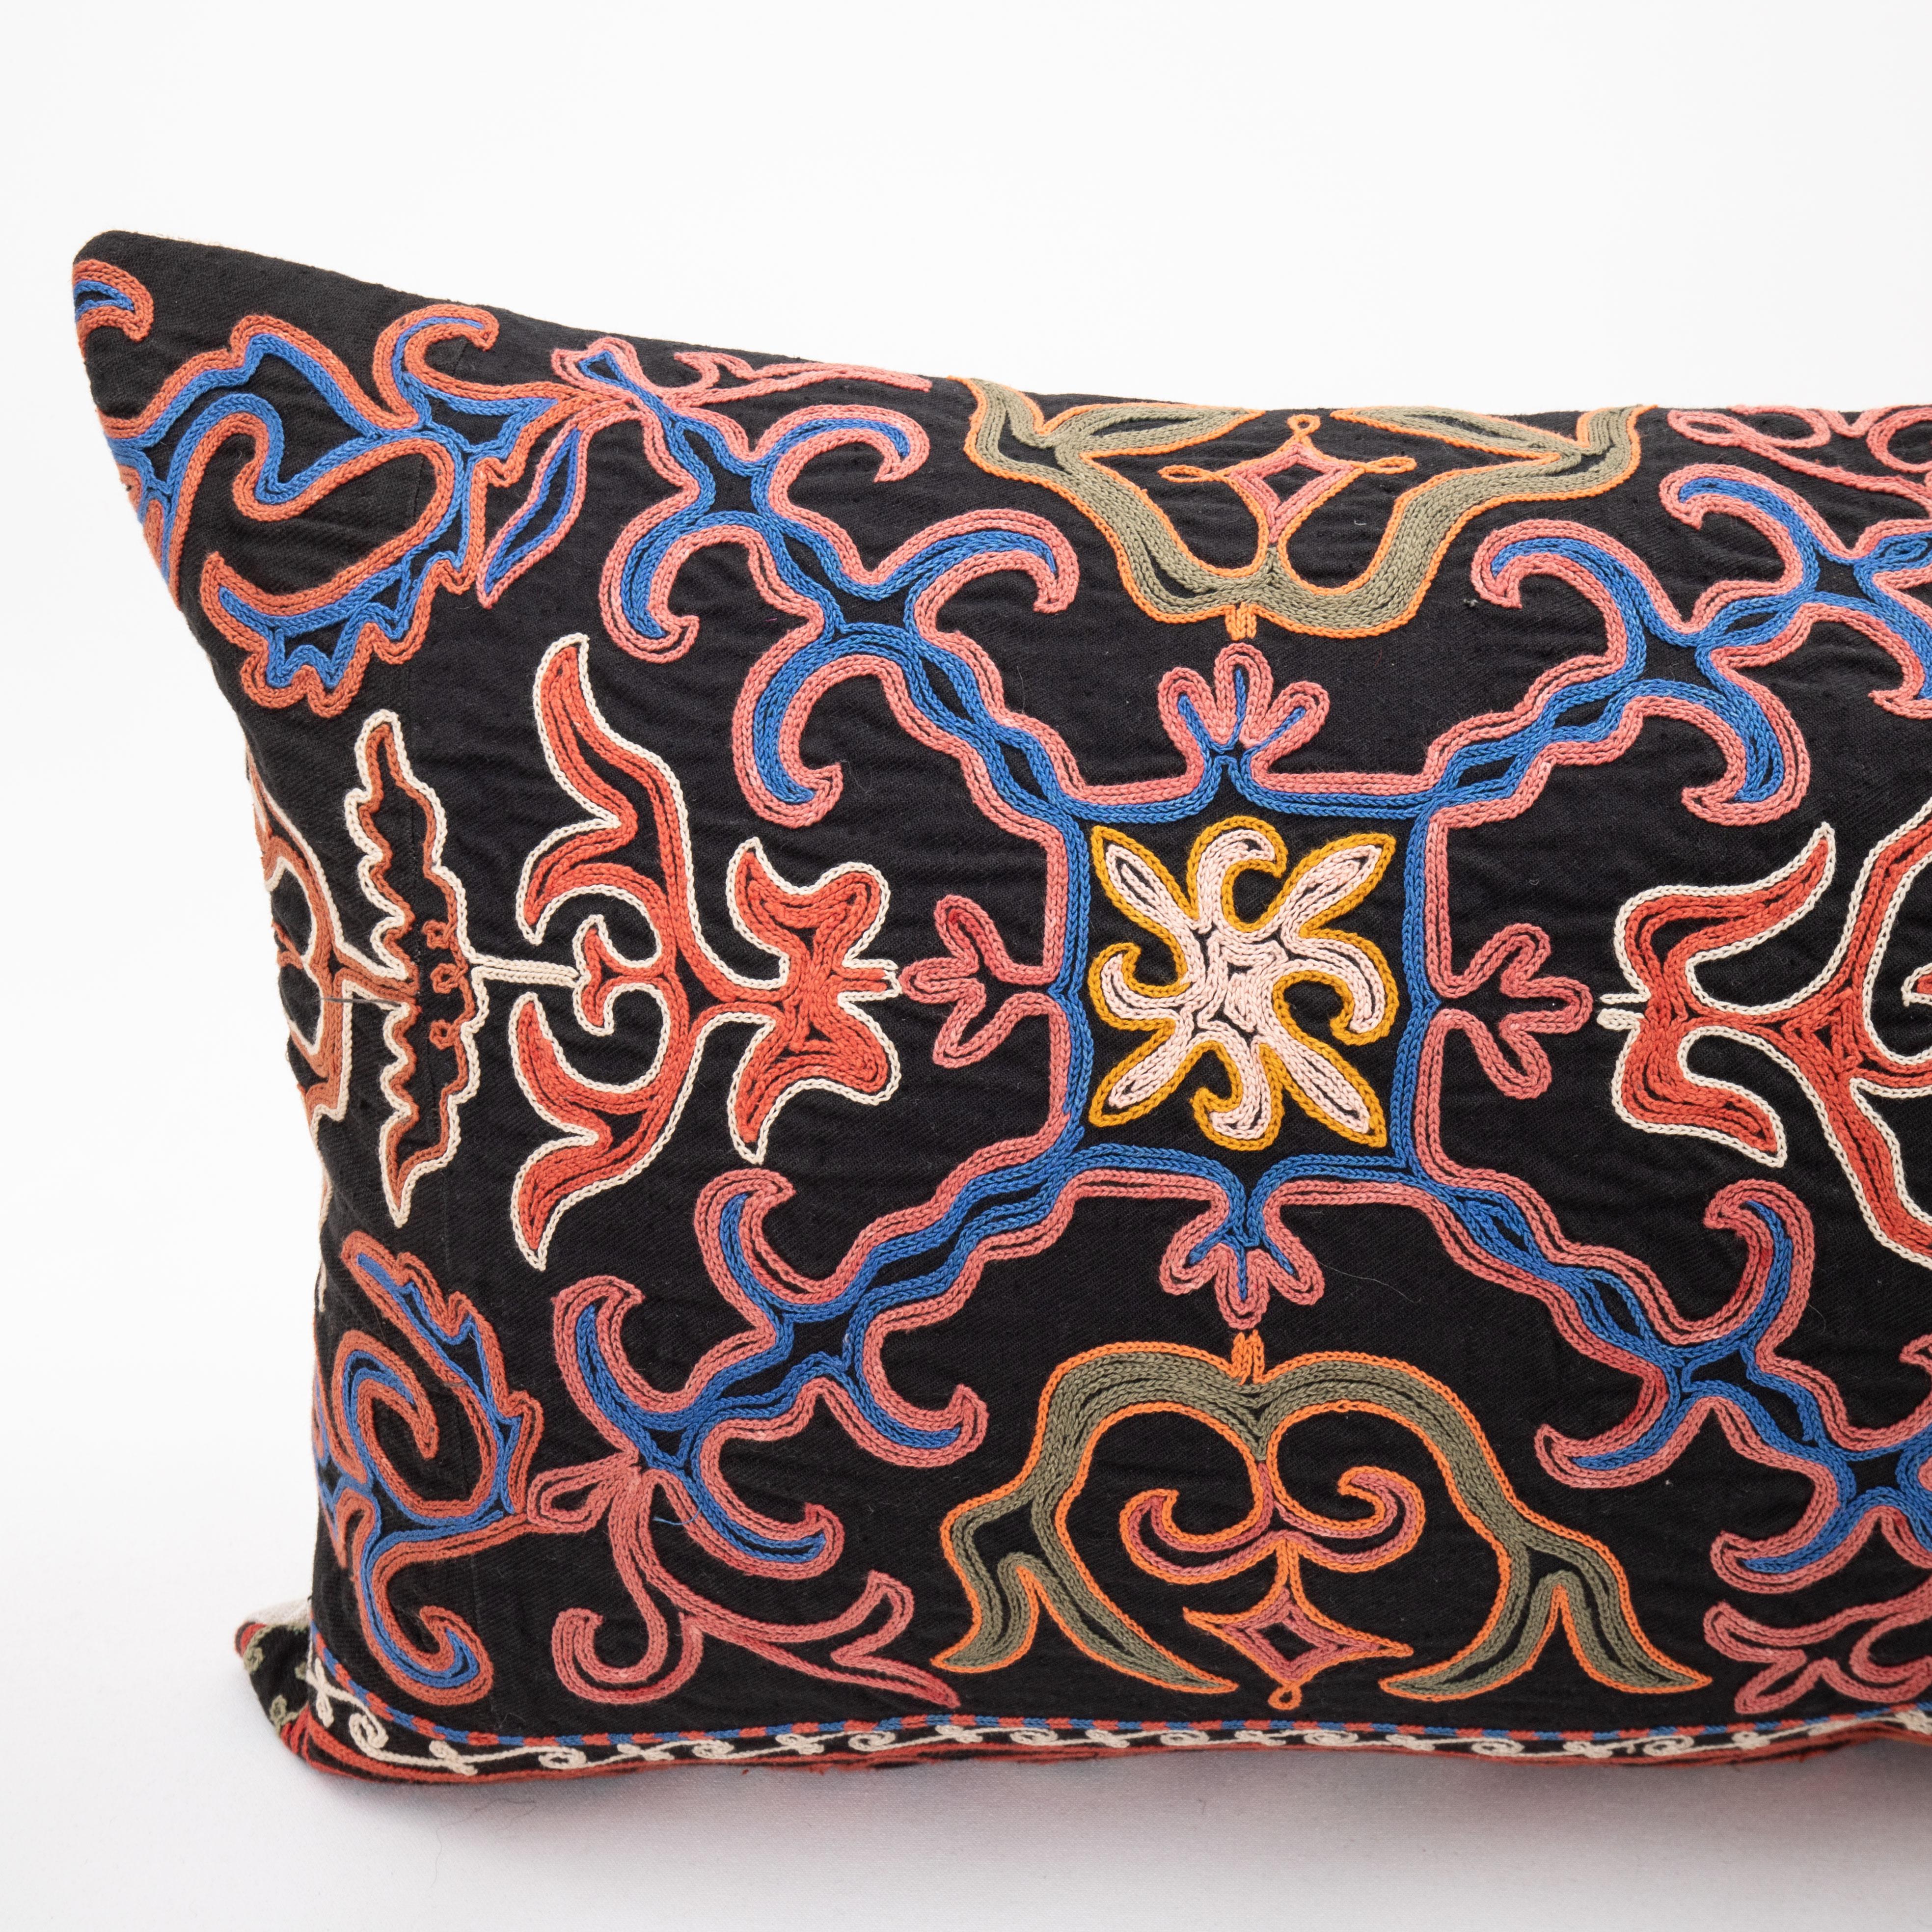 Kazakhstani Pillowcase made from a mid 20th. C. Kazakh / Kyrgyz Embroidery